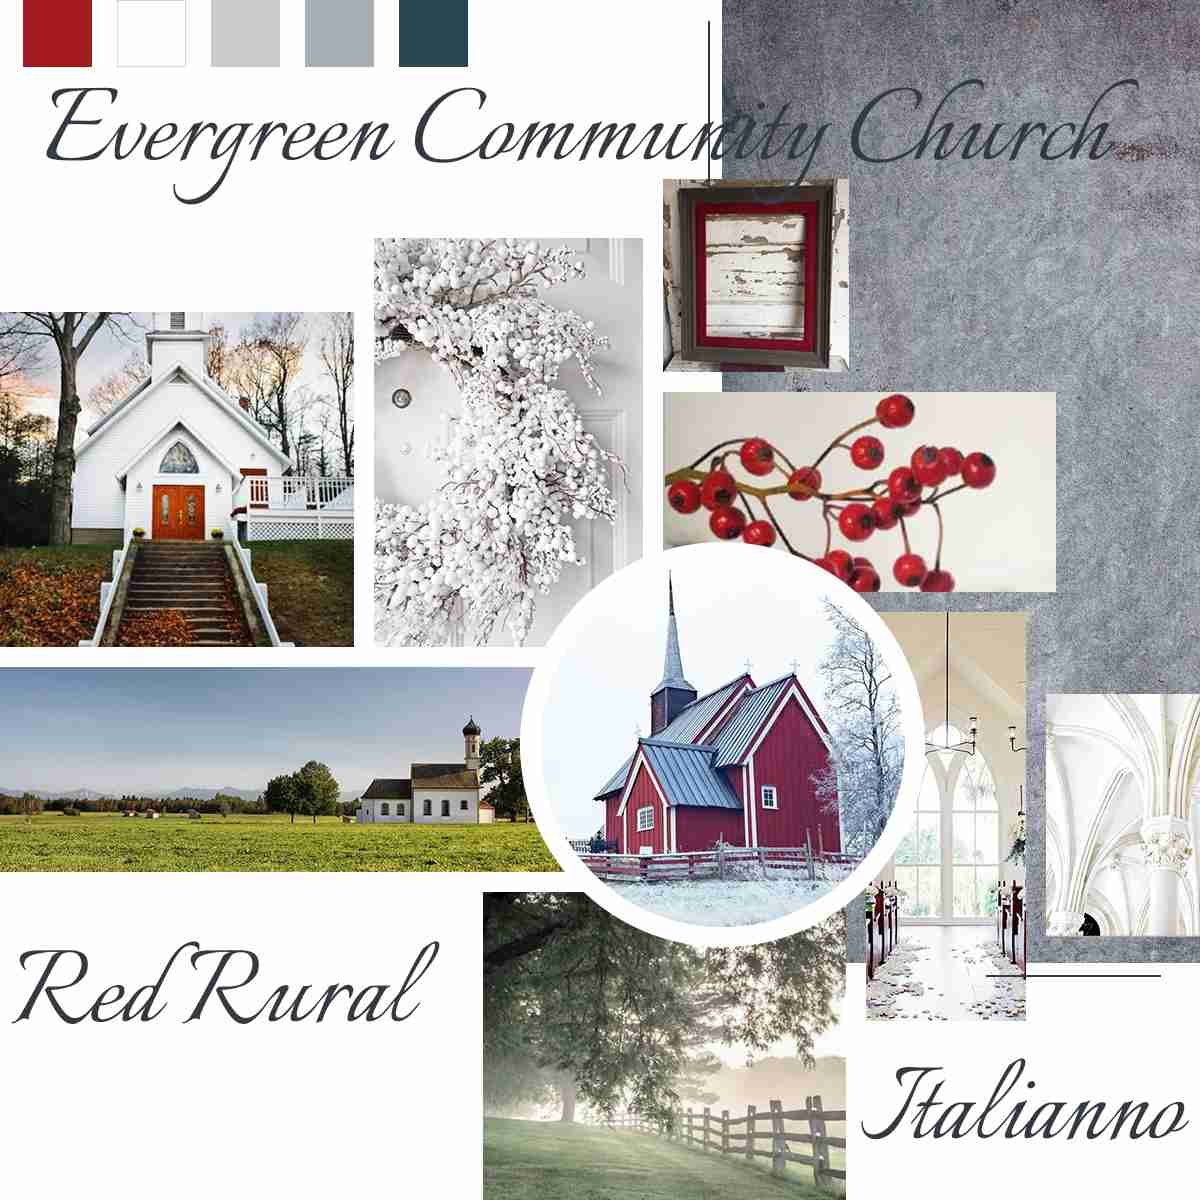 Evergreen Community Church Red Rural moodboard design